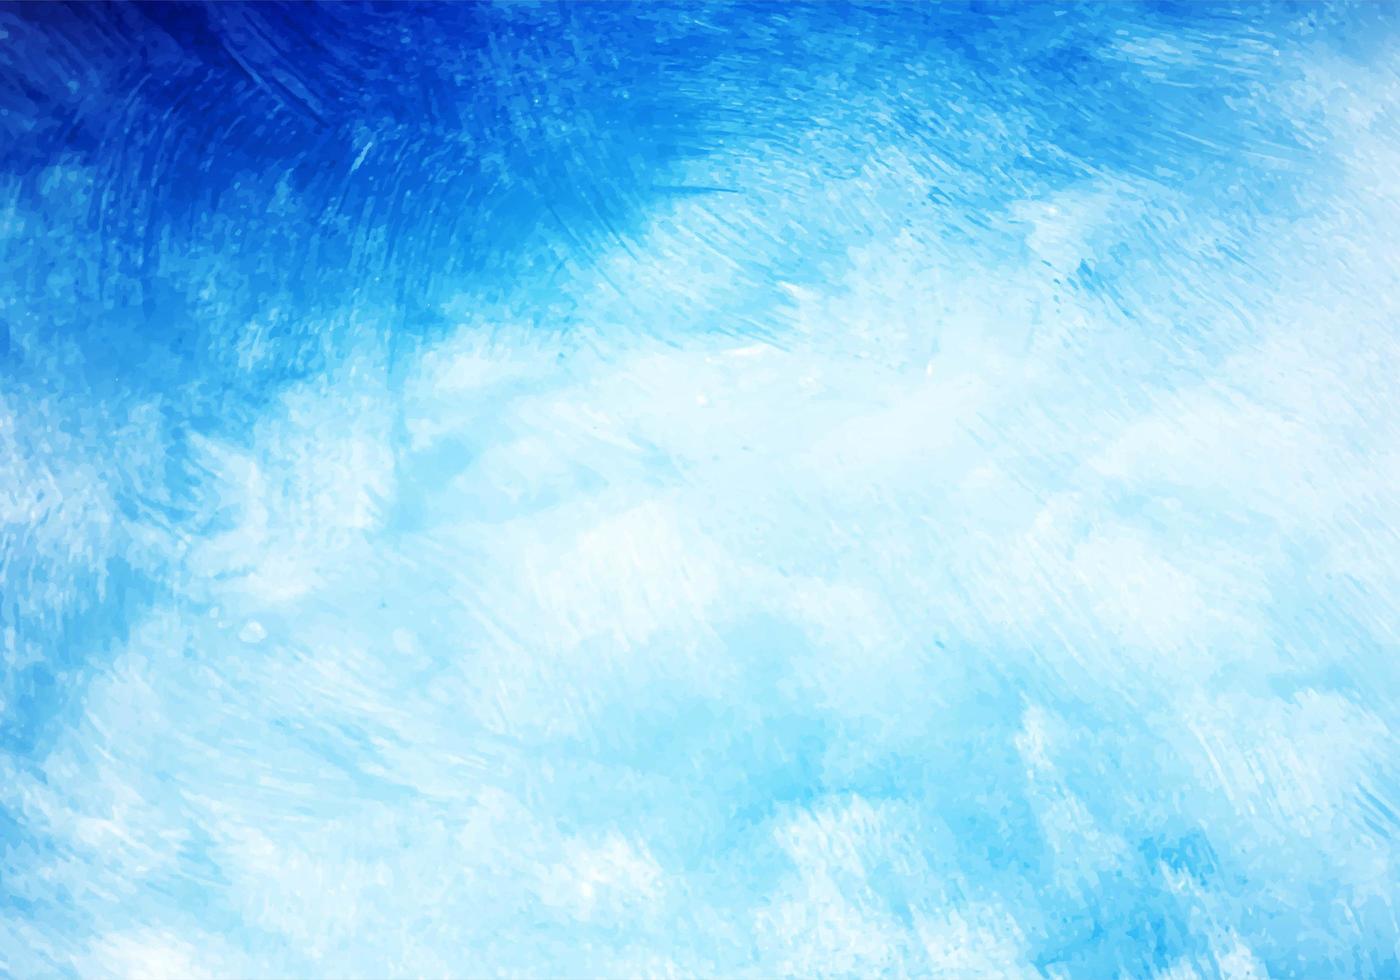 Modern Blue Watercolor Texture Background Download Free Vectors Clipart Graphics Vector Art